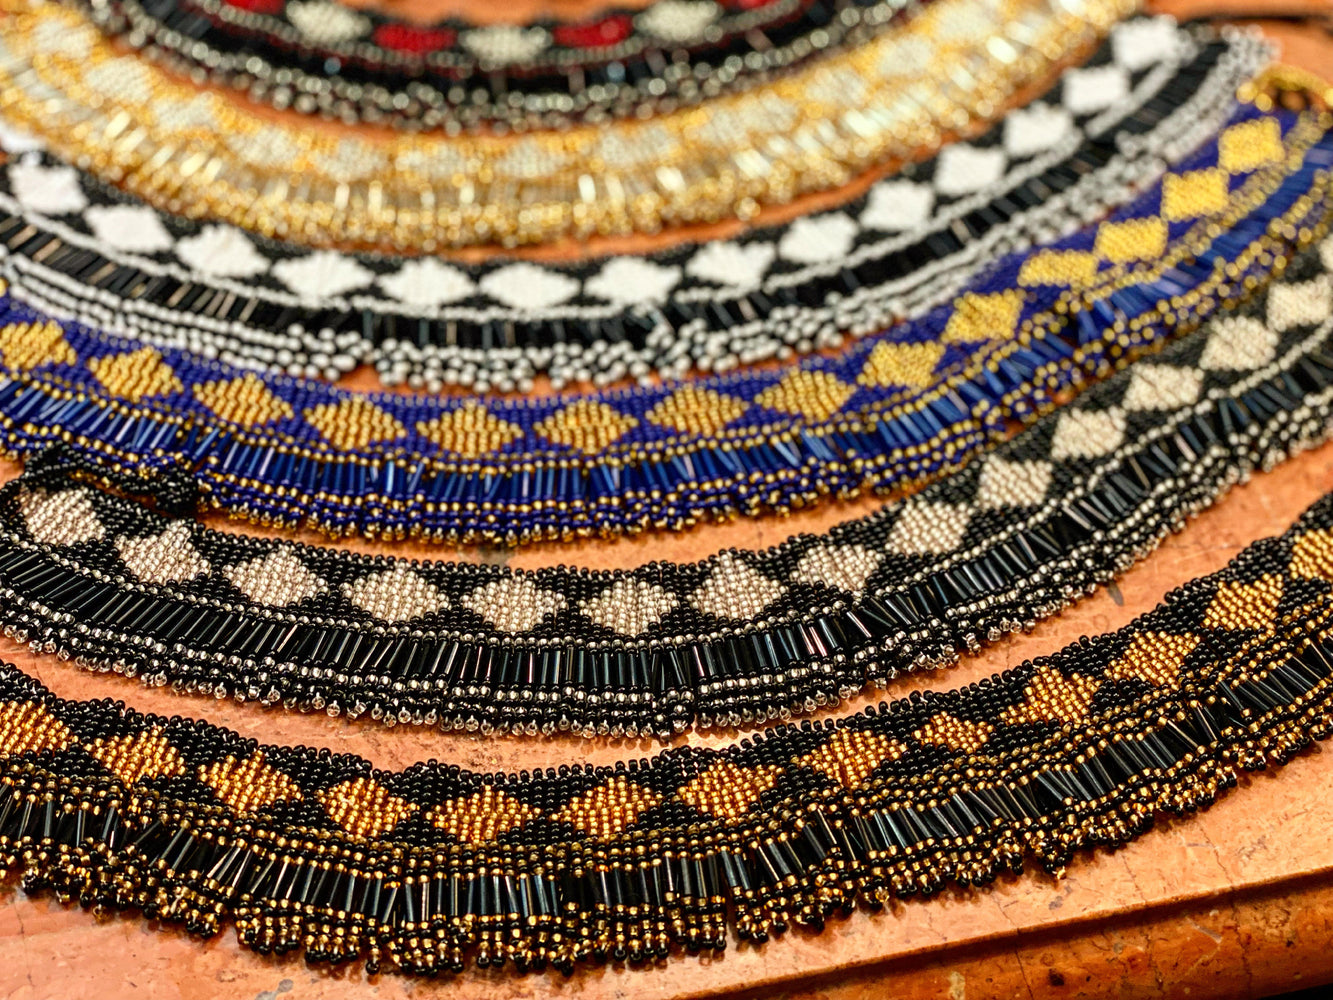 Getu Beaded Neckline Necklace - Multiple Colors | Handmade in Tanzania